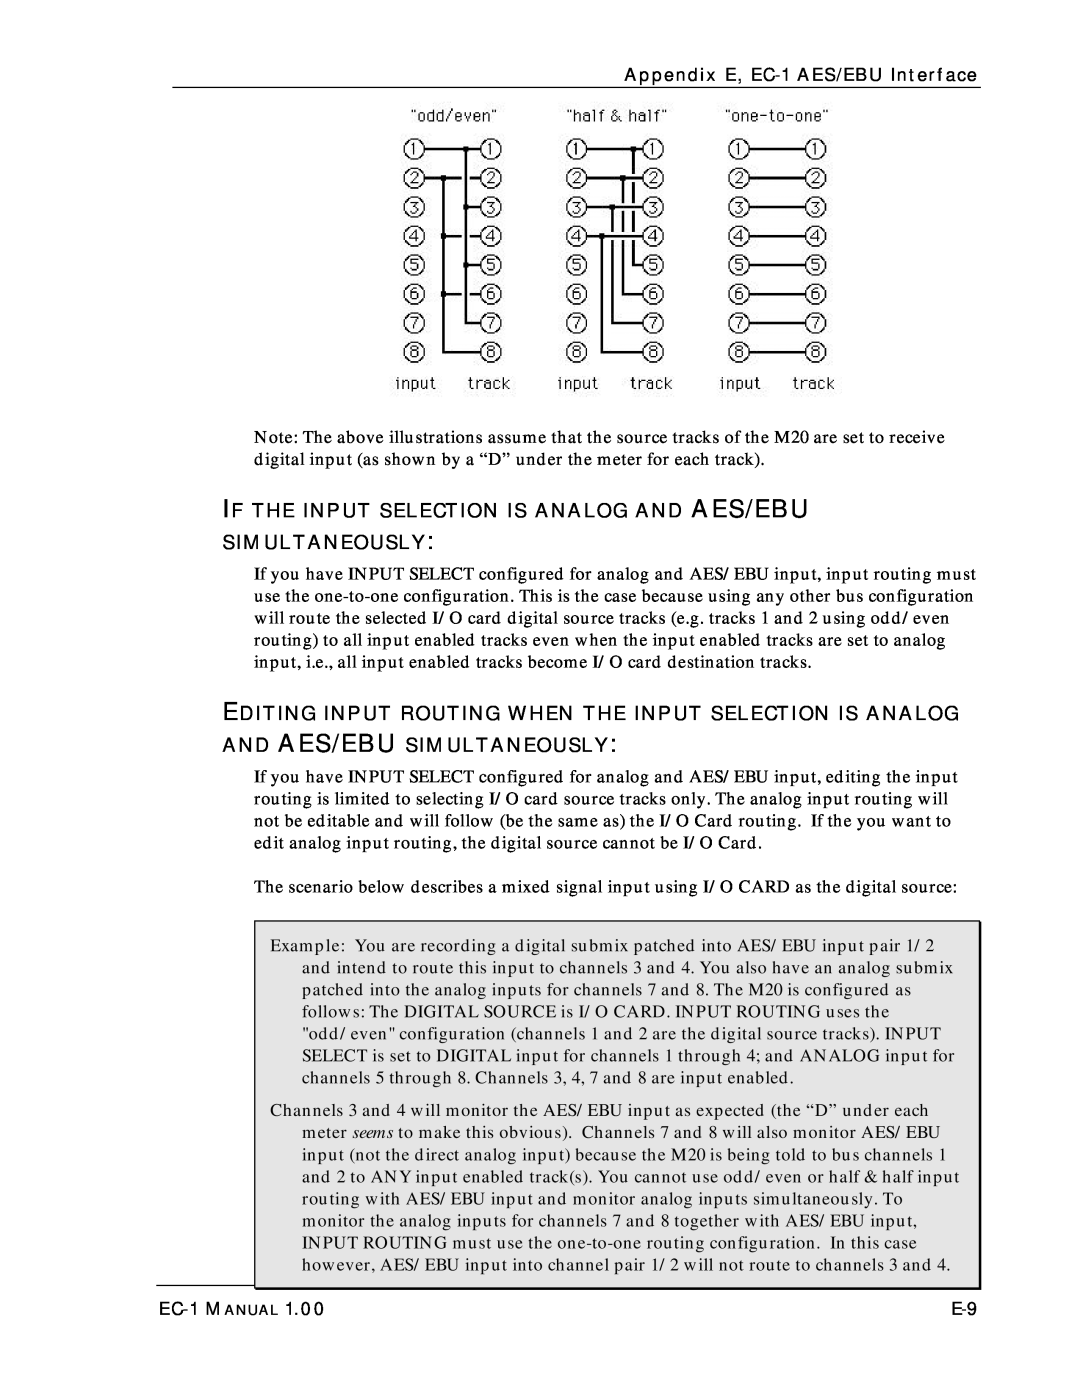 Alesis EC-1 A ES/EBU If The Input Selection Is Analog And Aes/Ebu Simultaneously, Appendix E, EC-1 AES/EBU Interface 